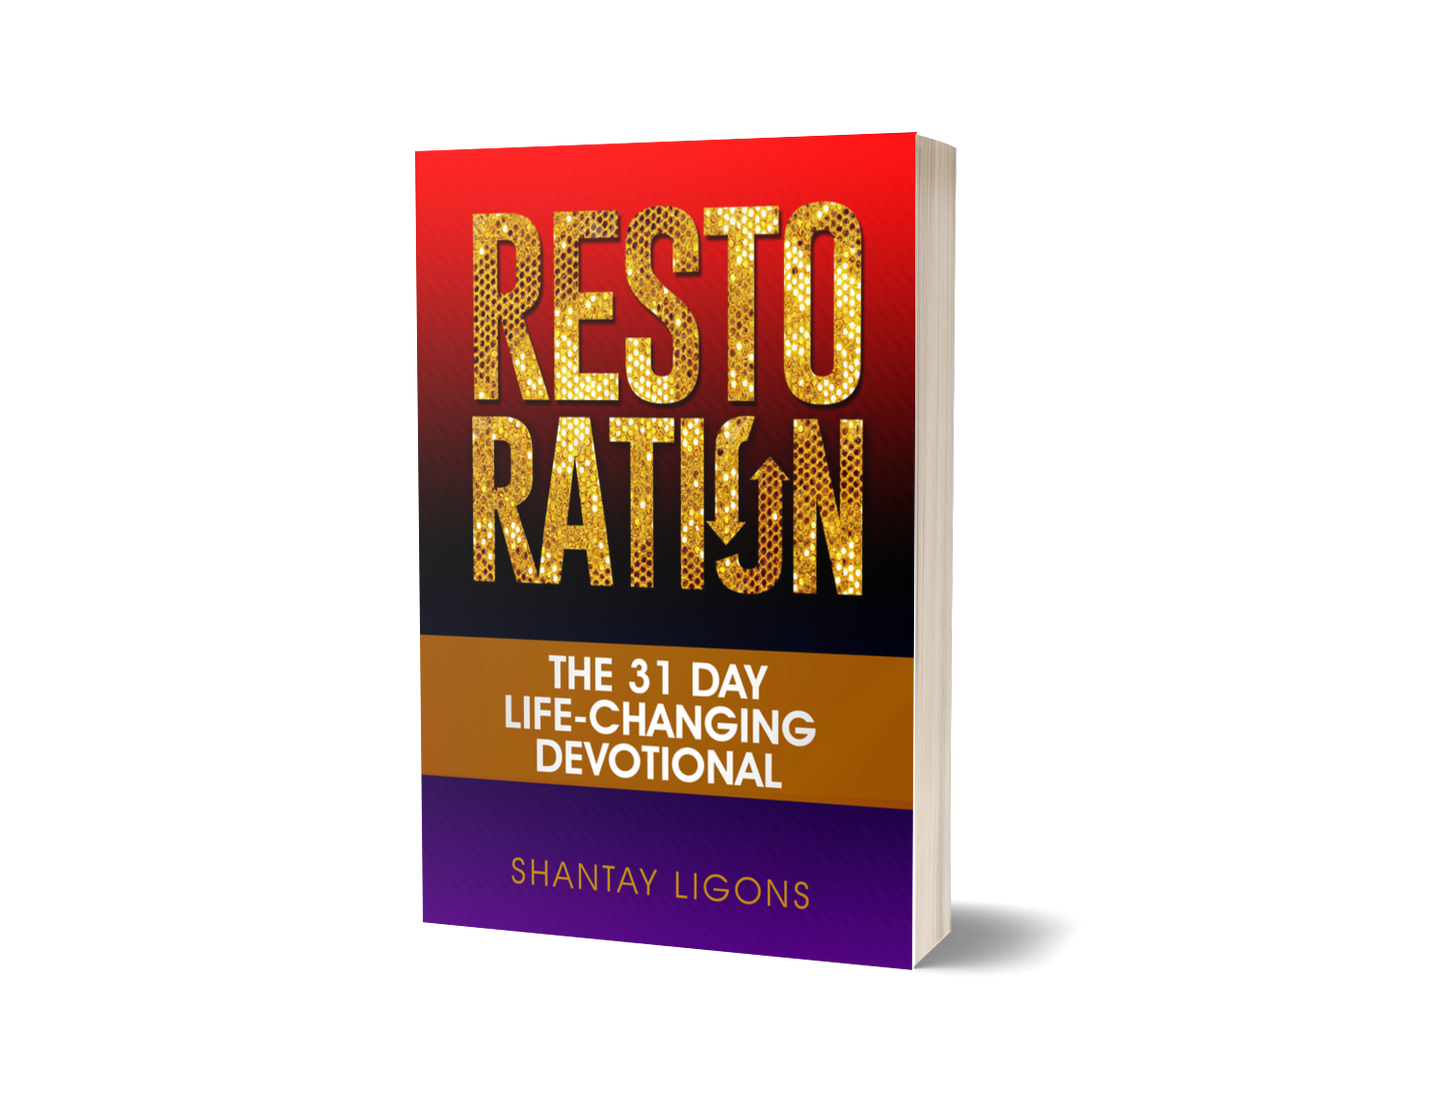 Restoration 31 Day Devotional